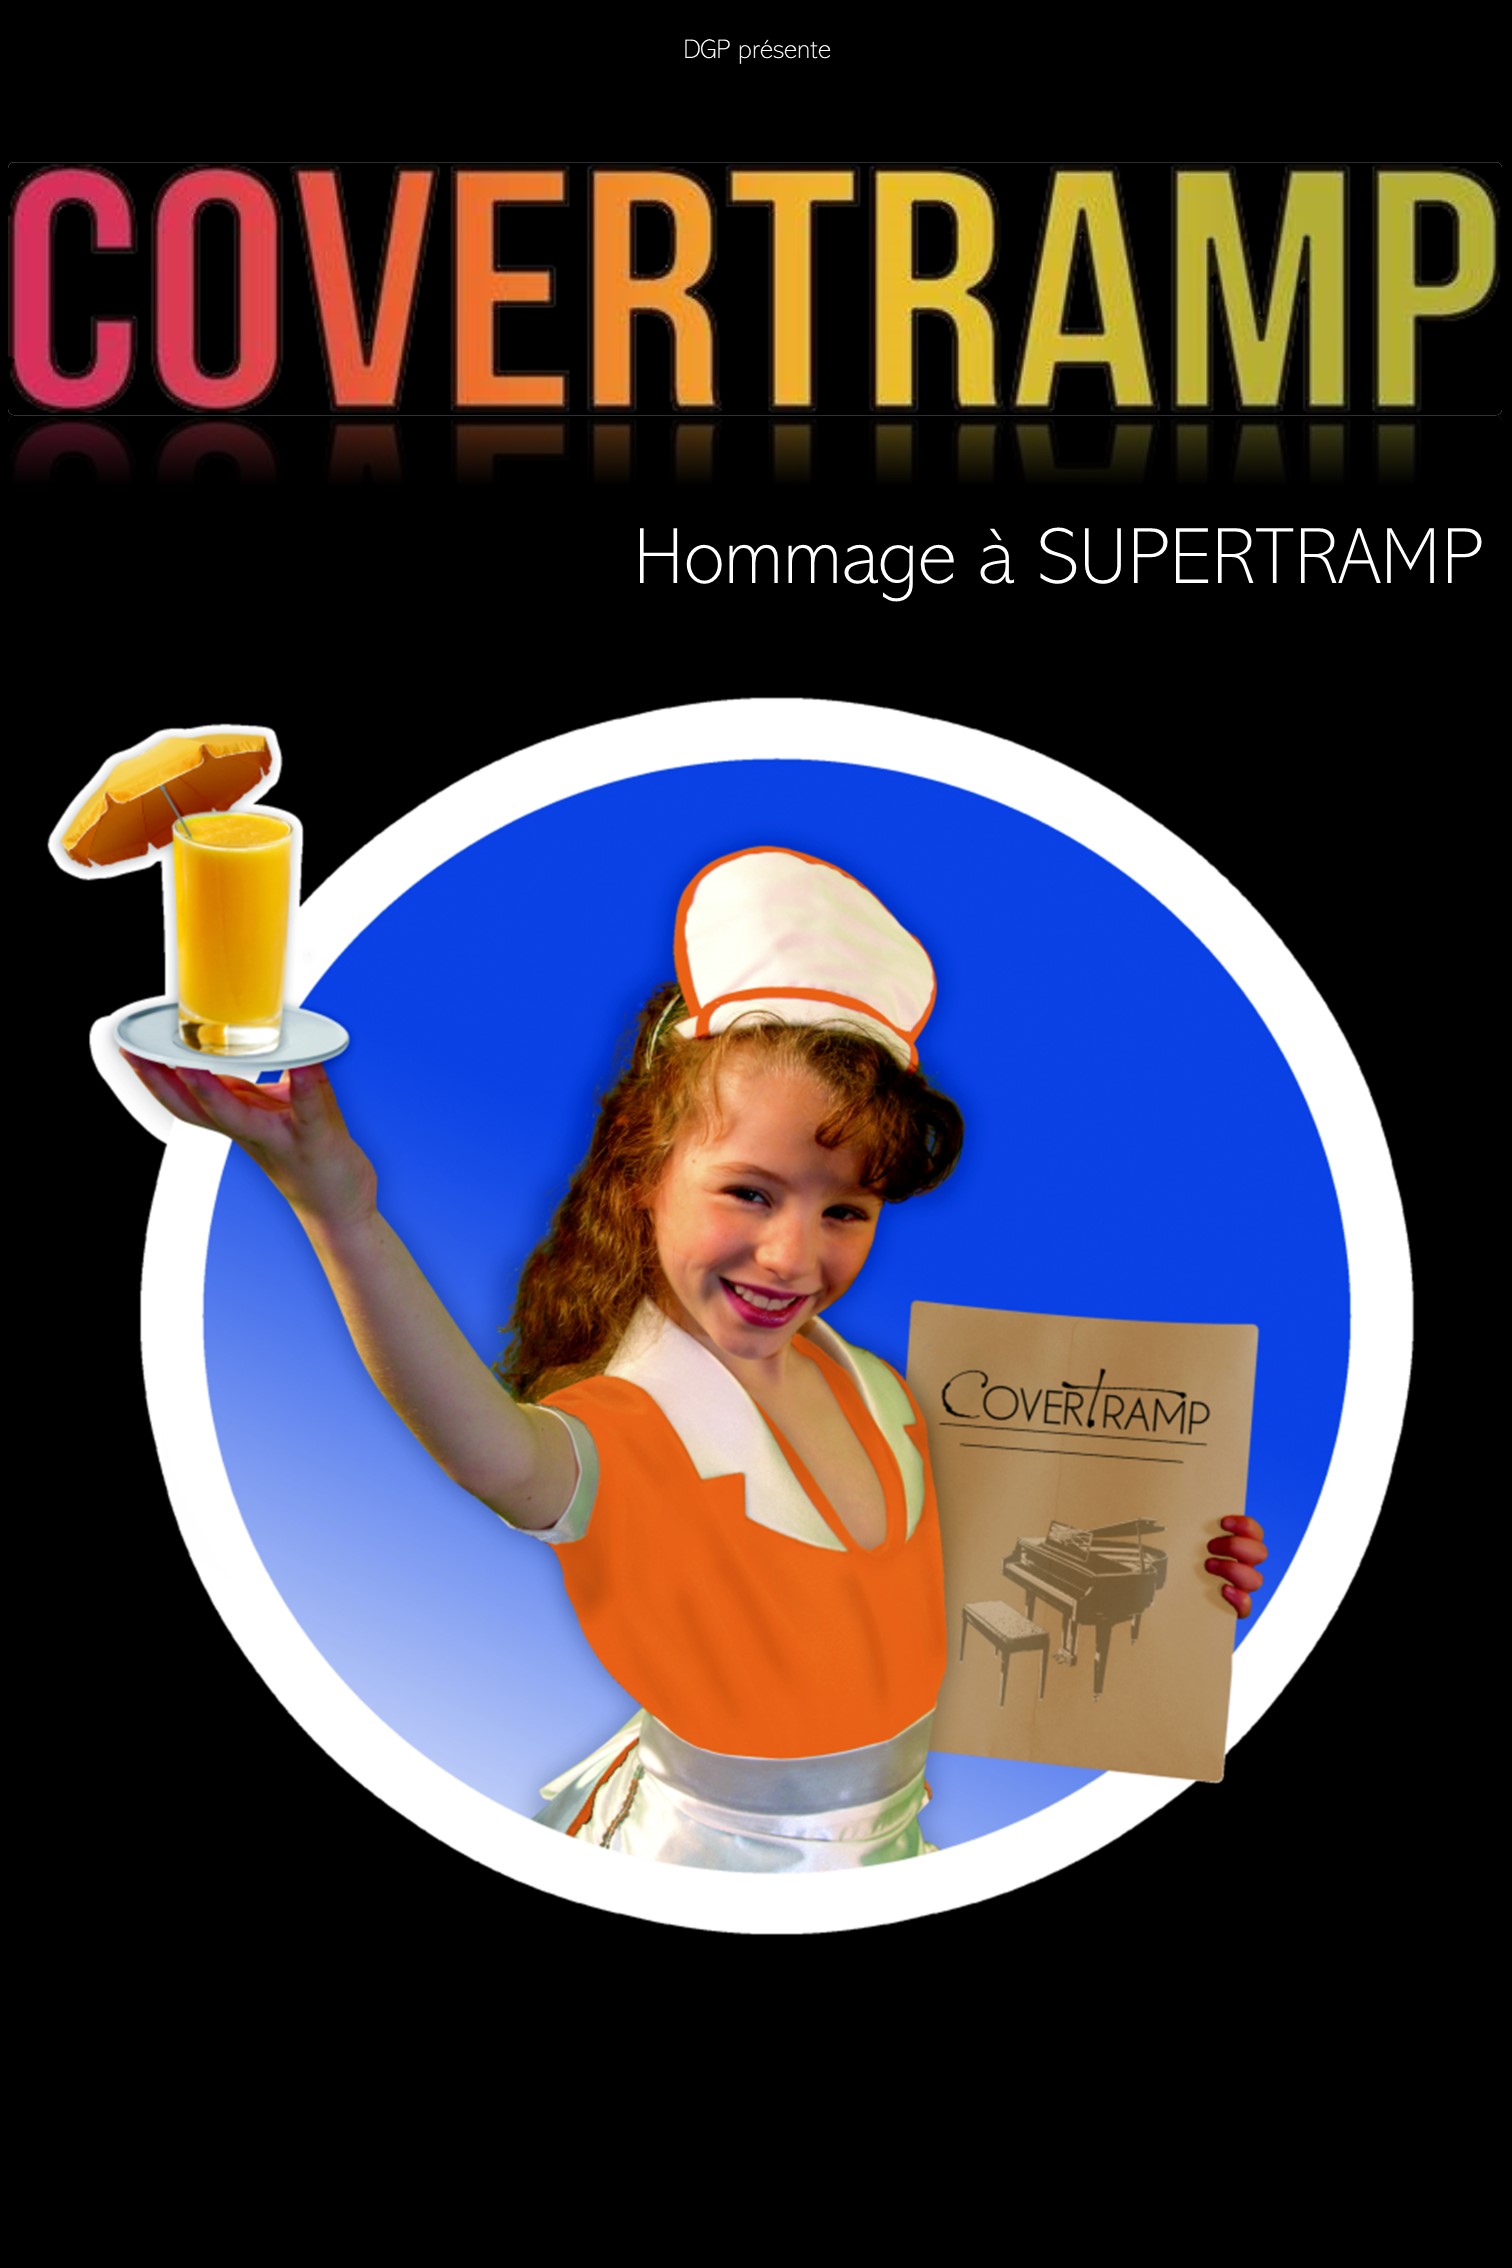 COVERTRAMP - hommage a Supertramp